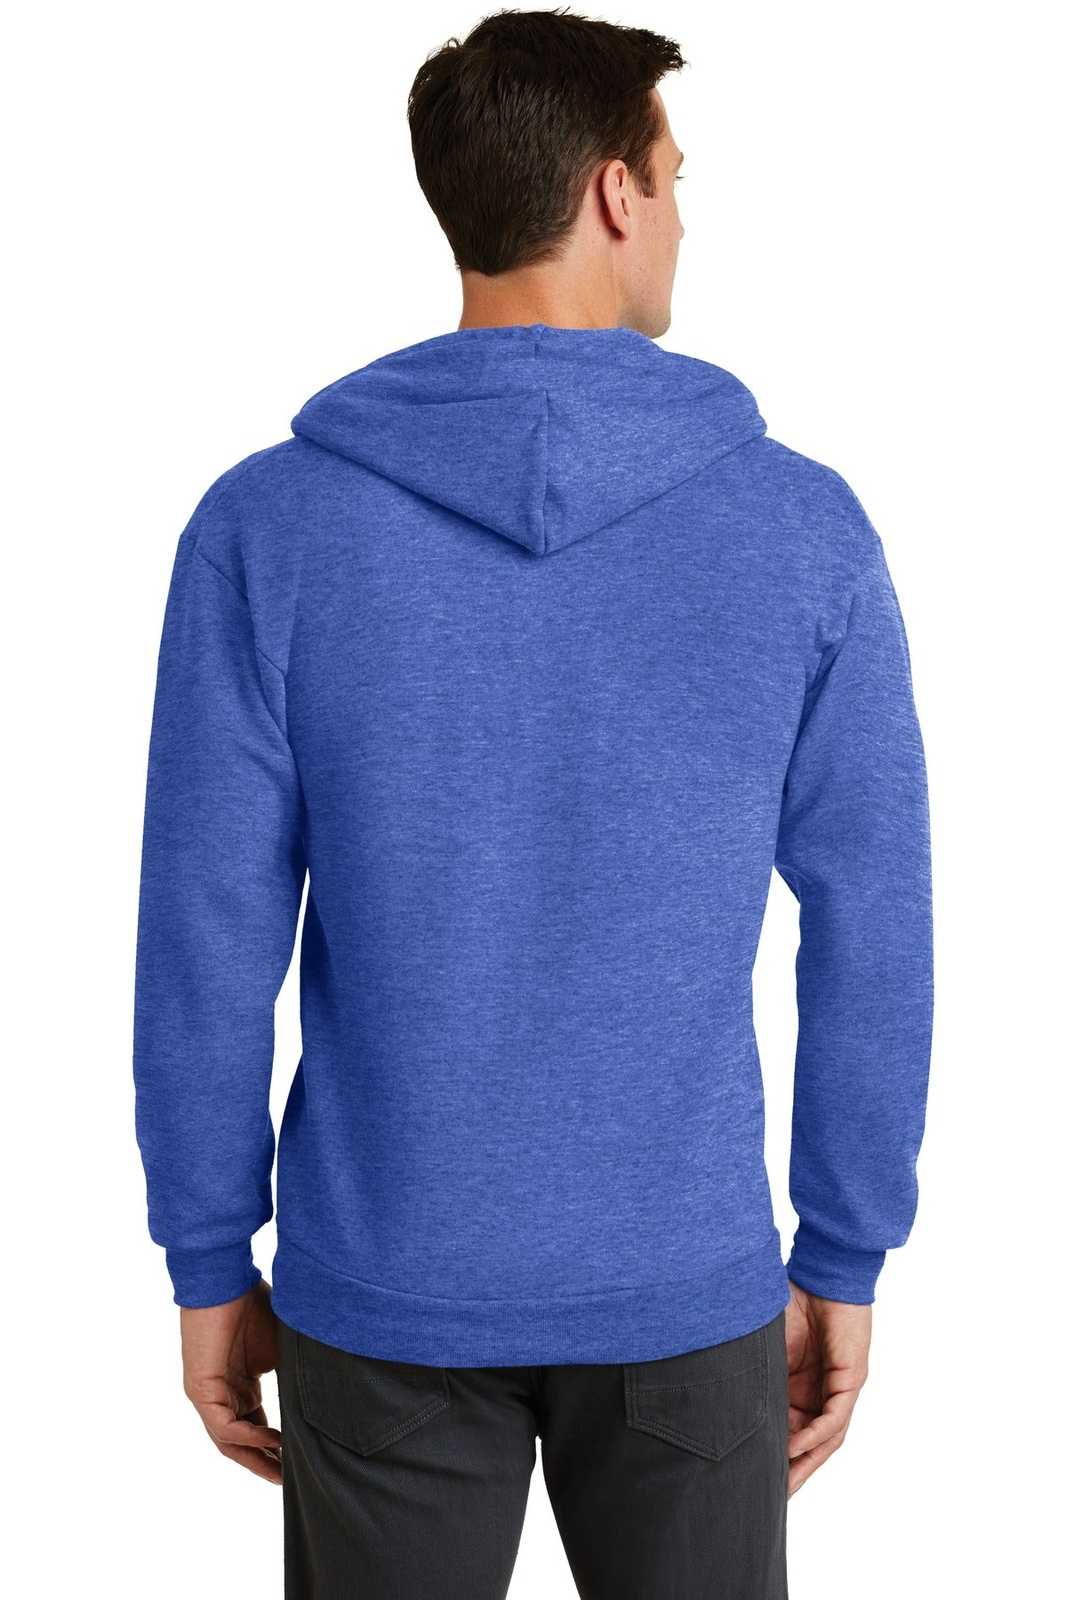 Port & Company PC78ZH Core Fleece Full-Zip Hooded Sweatshirt - Heather Royal - HIT a Double - 1